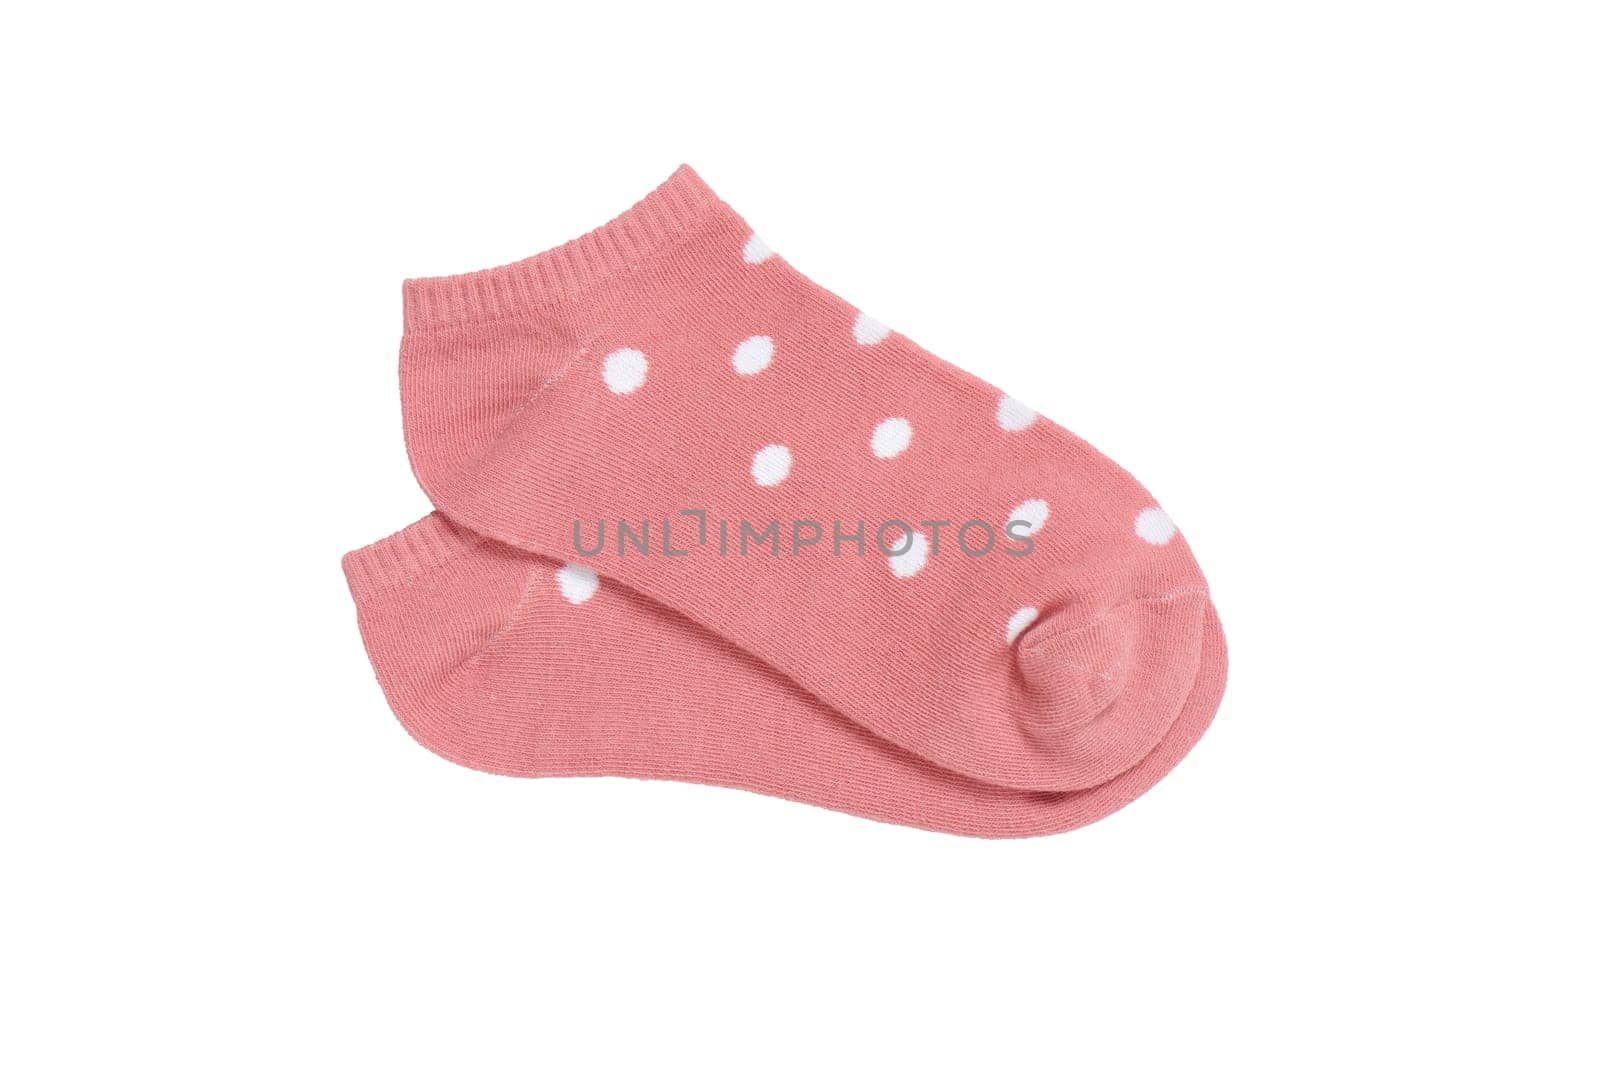 Pink polka dot ankle socks on white background, isolated